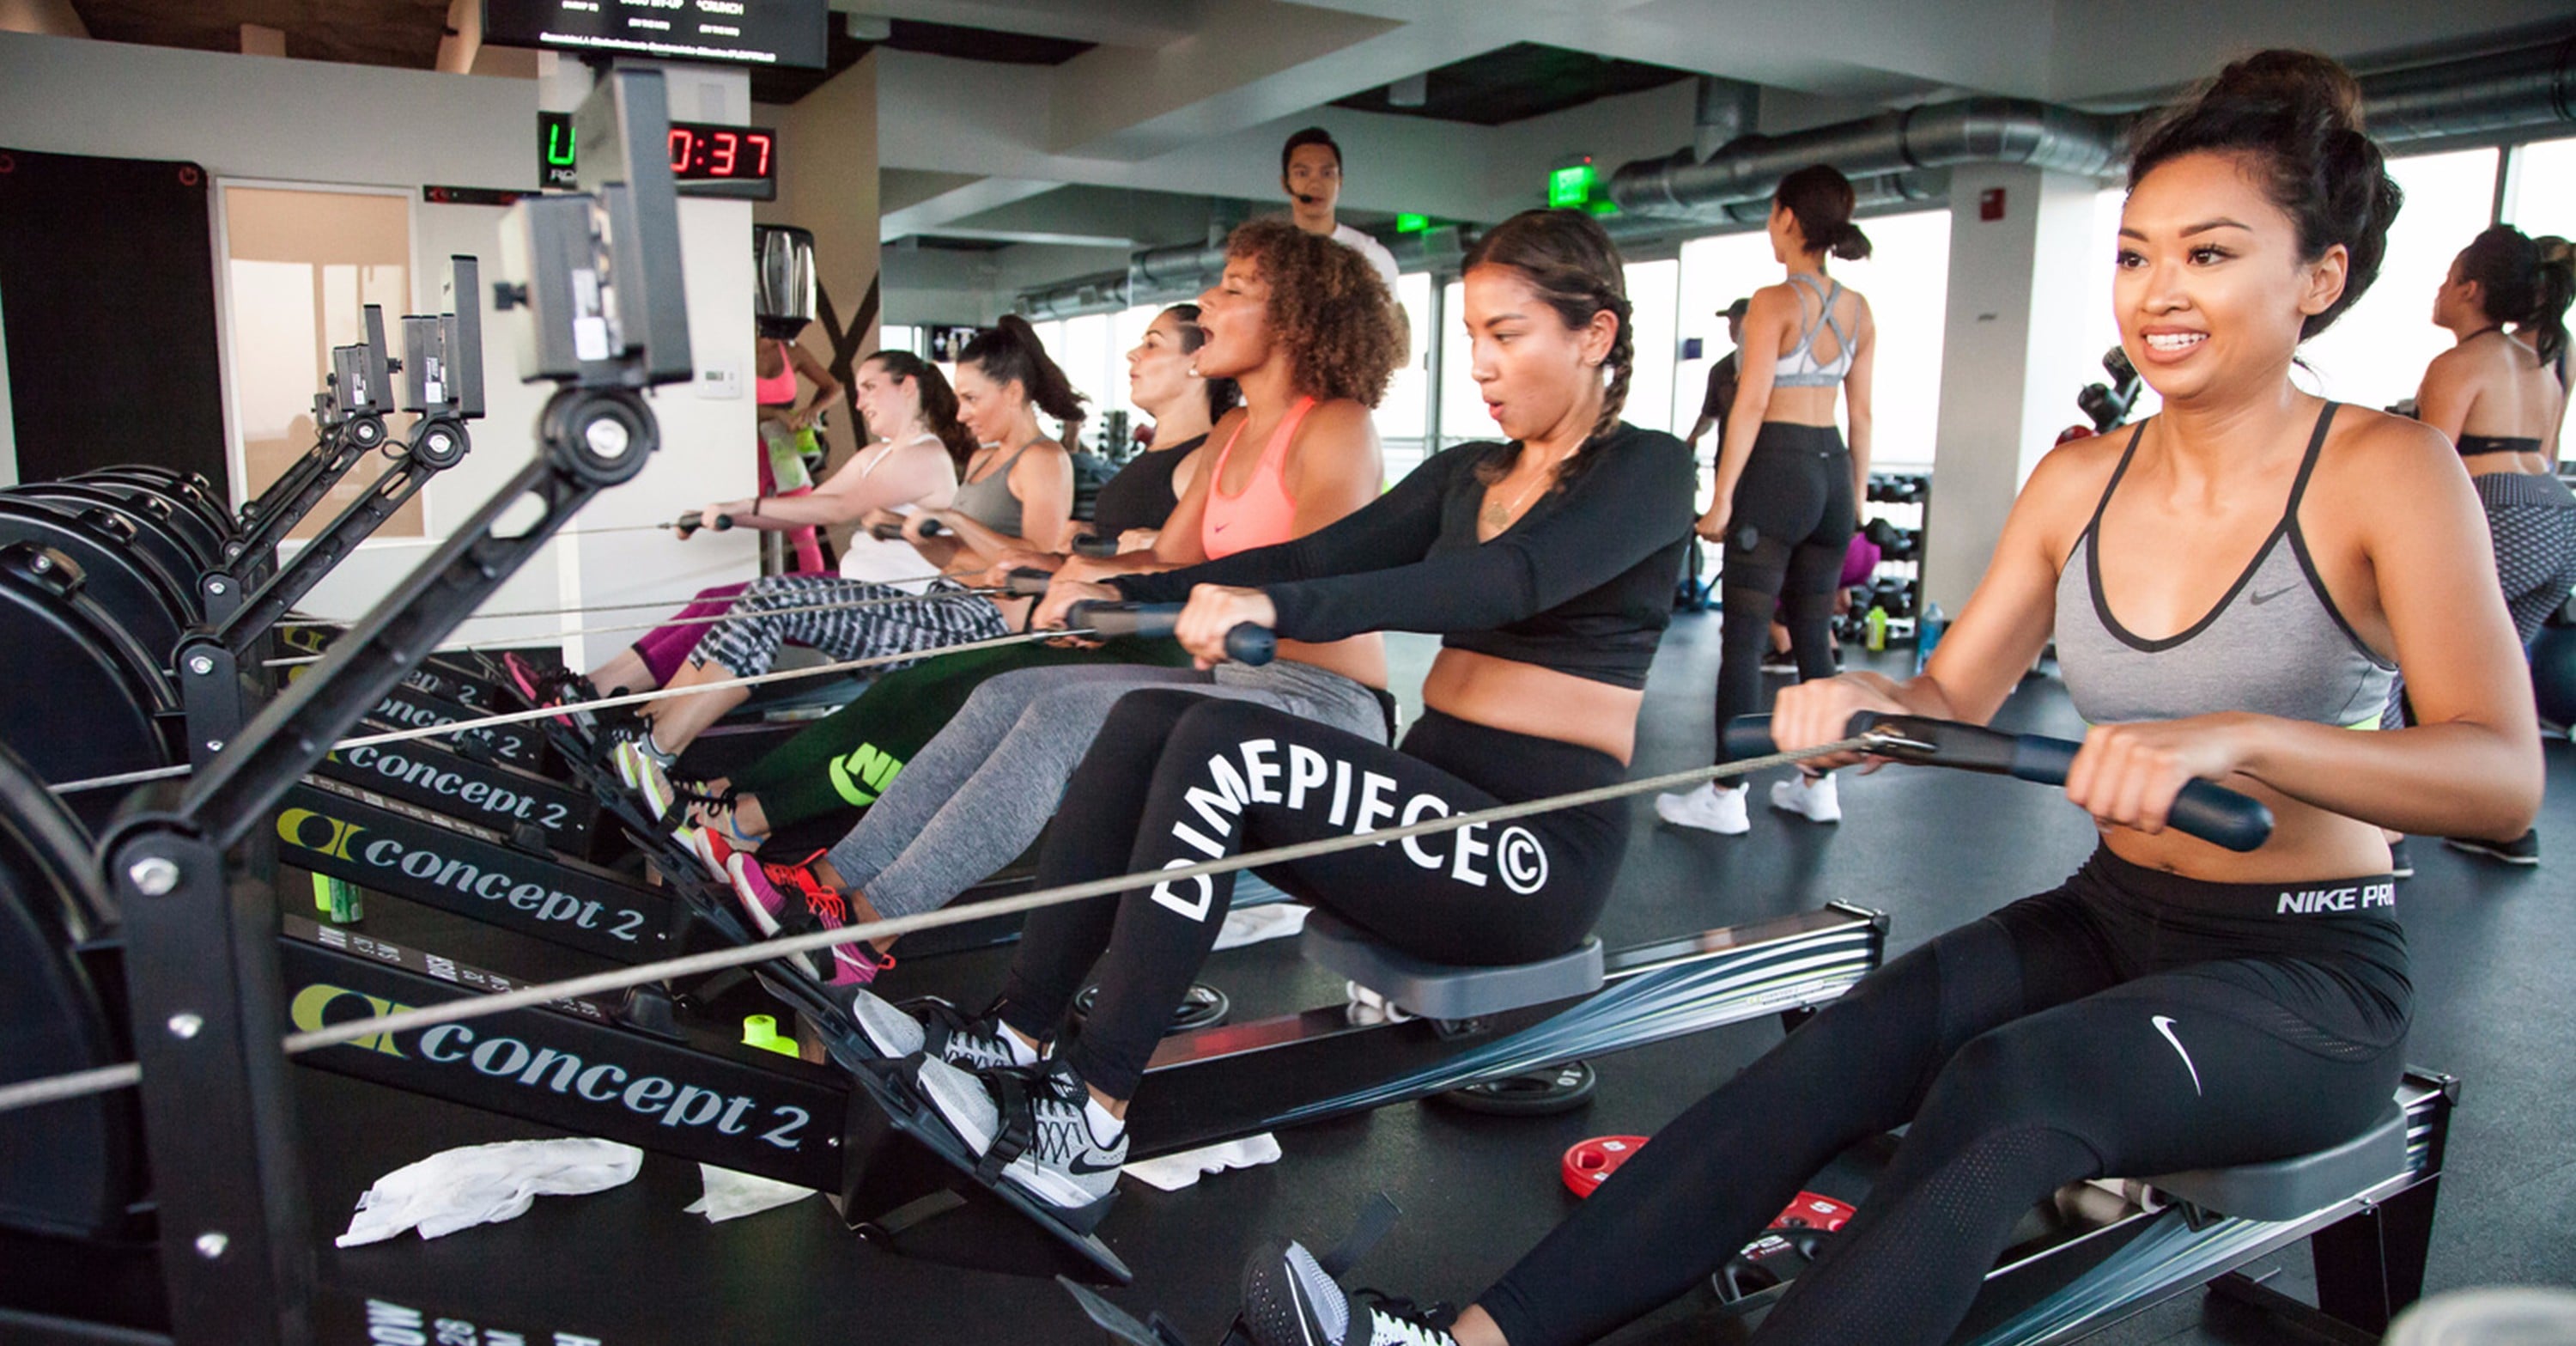 Triin Randloo on LinkedIn: #treadmillworkout #cardioworkout #fitness  #wellness